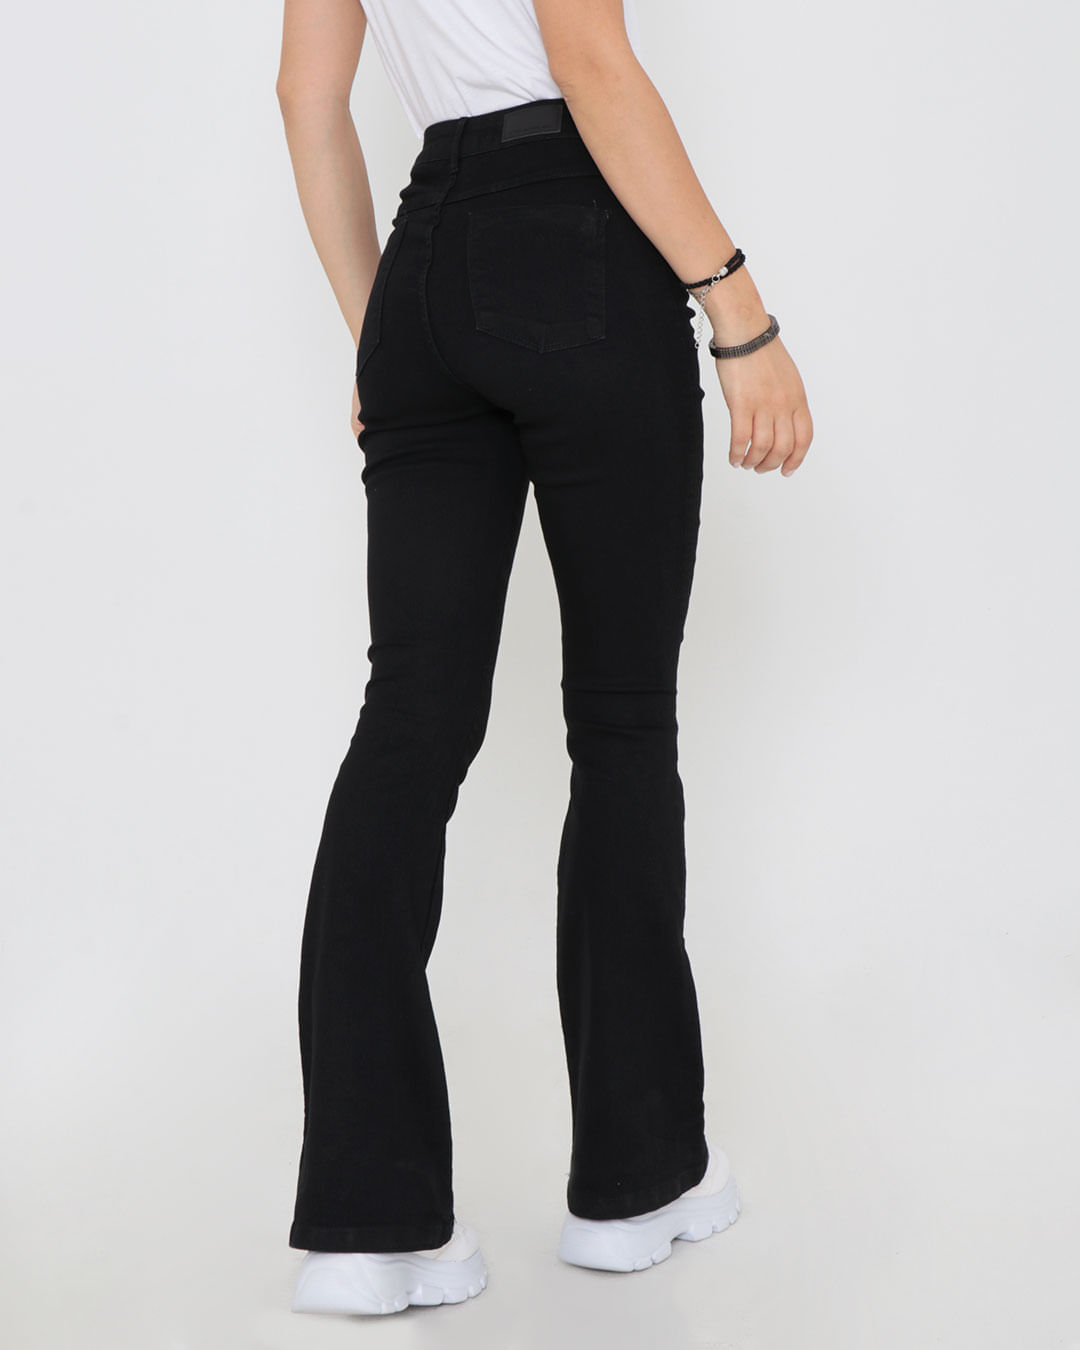 Calça jeans feminina flare preta